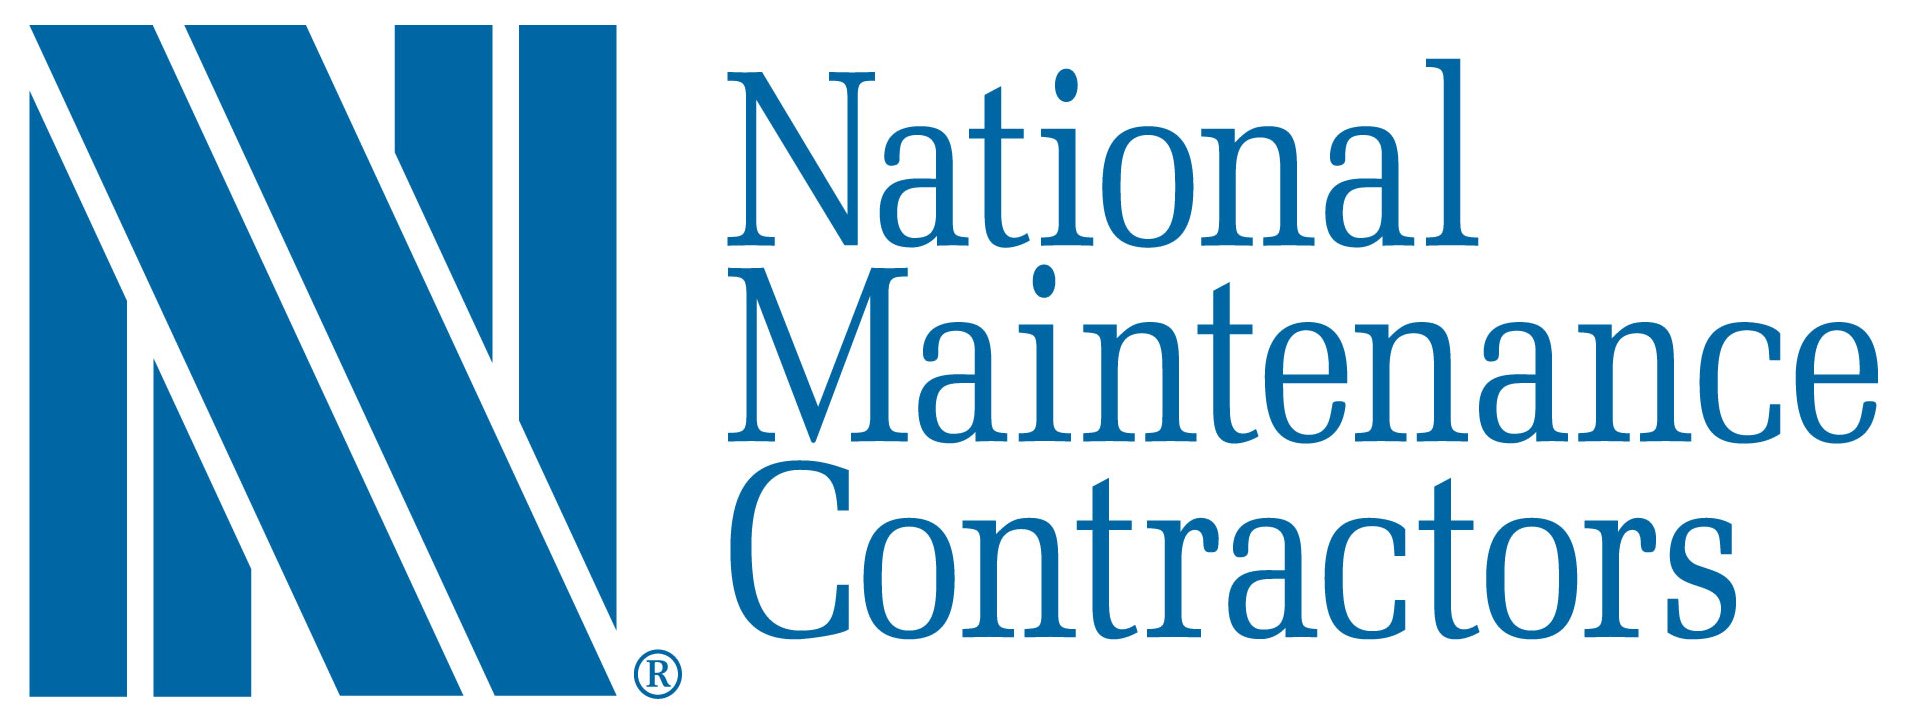 National Maint. Contractors.jpg